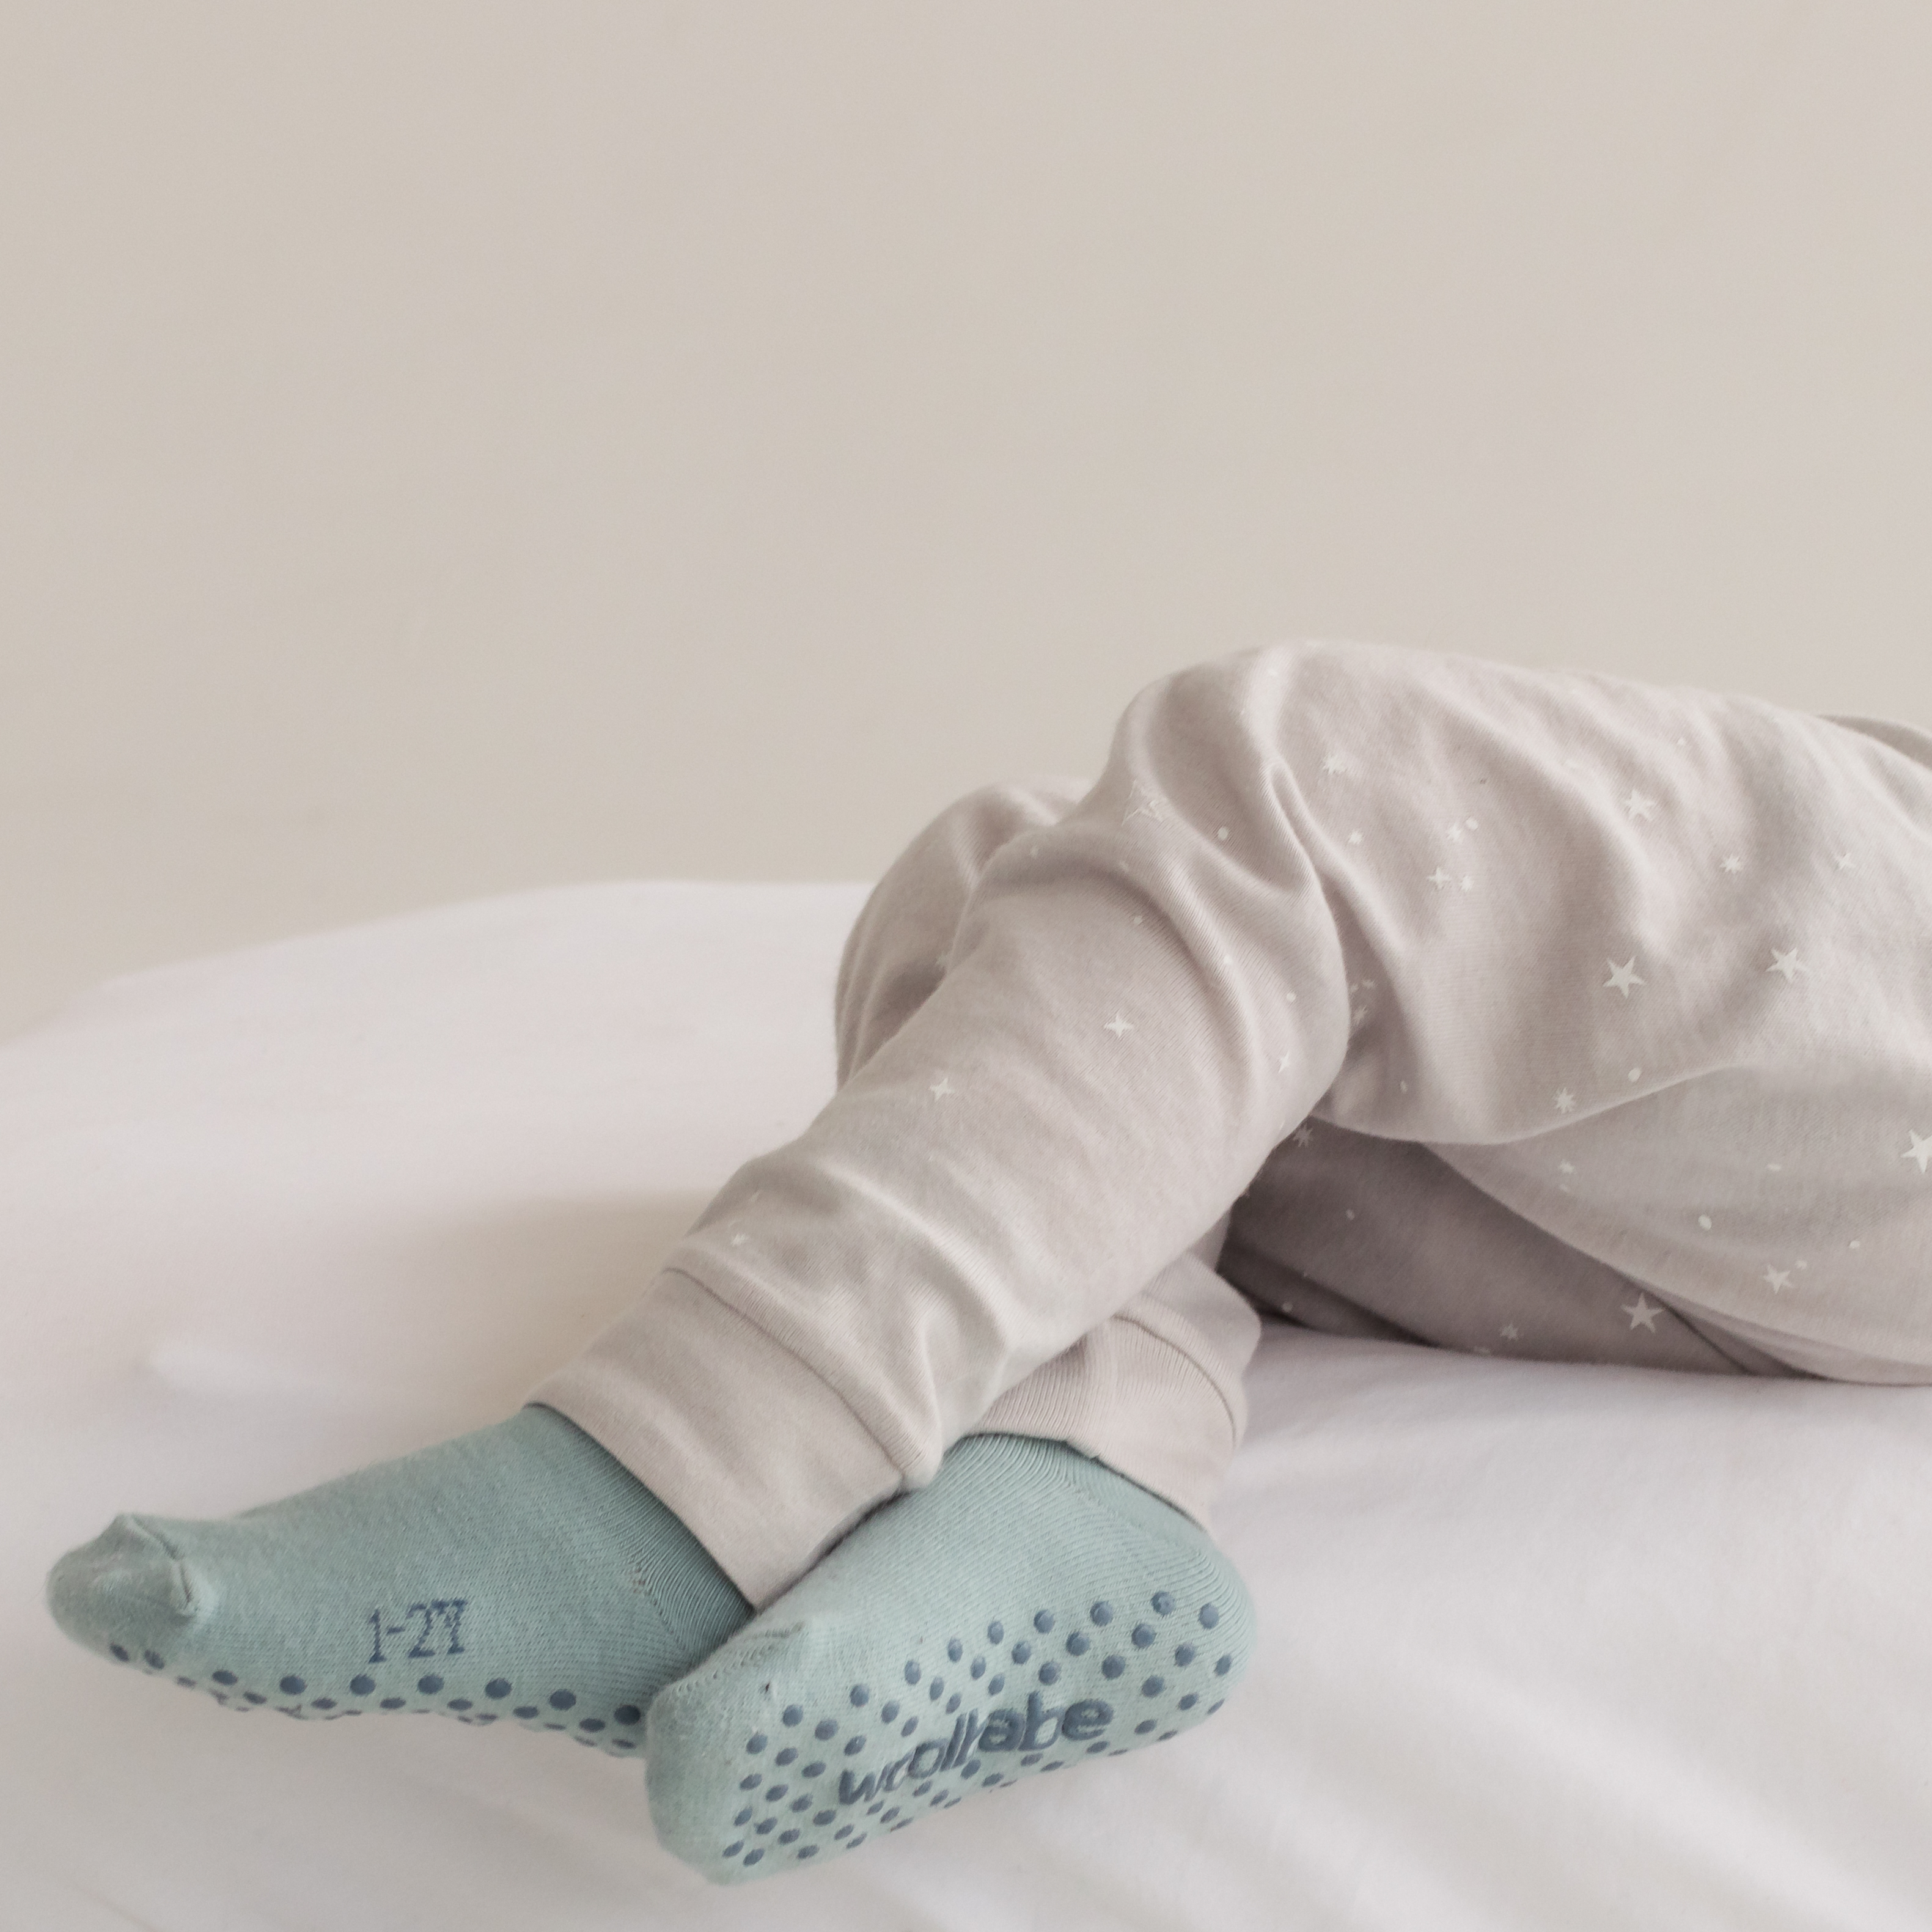 Woolbabe Merino & Organic Cotton Sleepy Socks - Tide